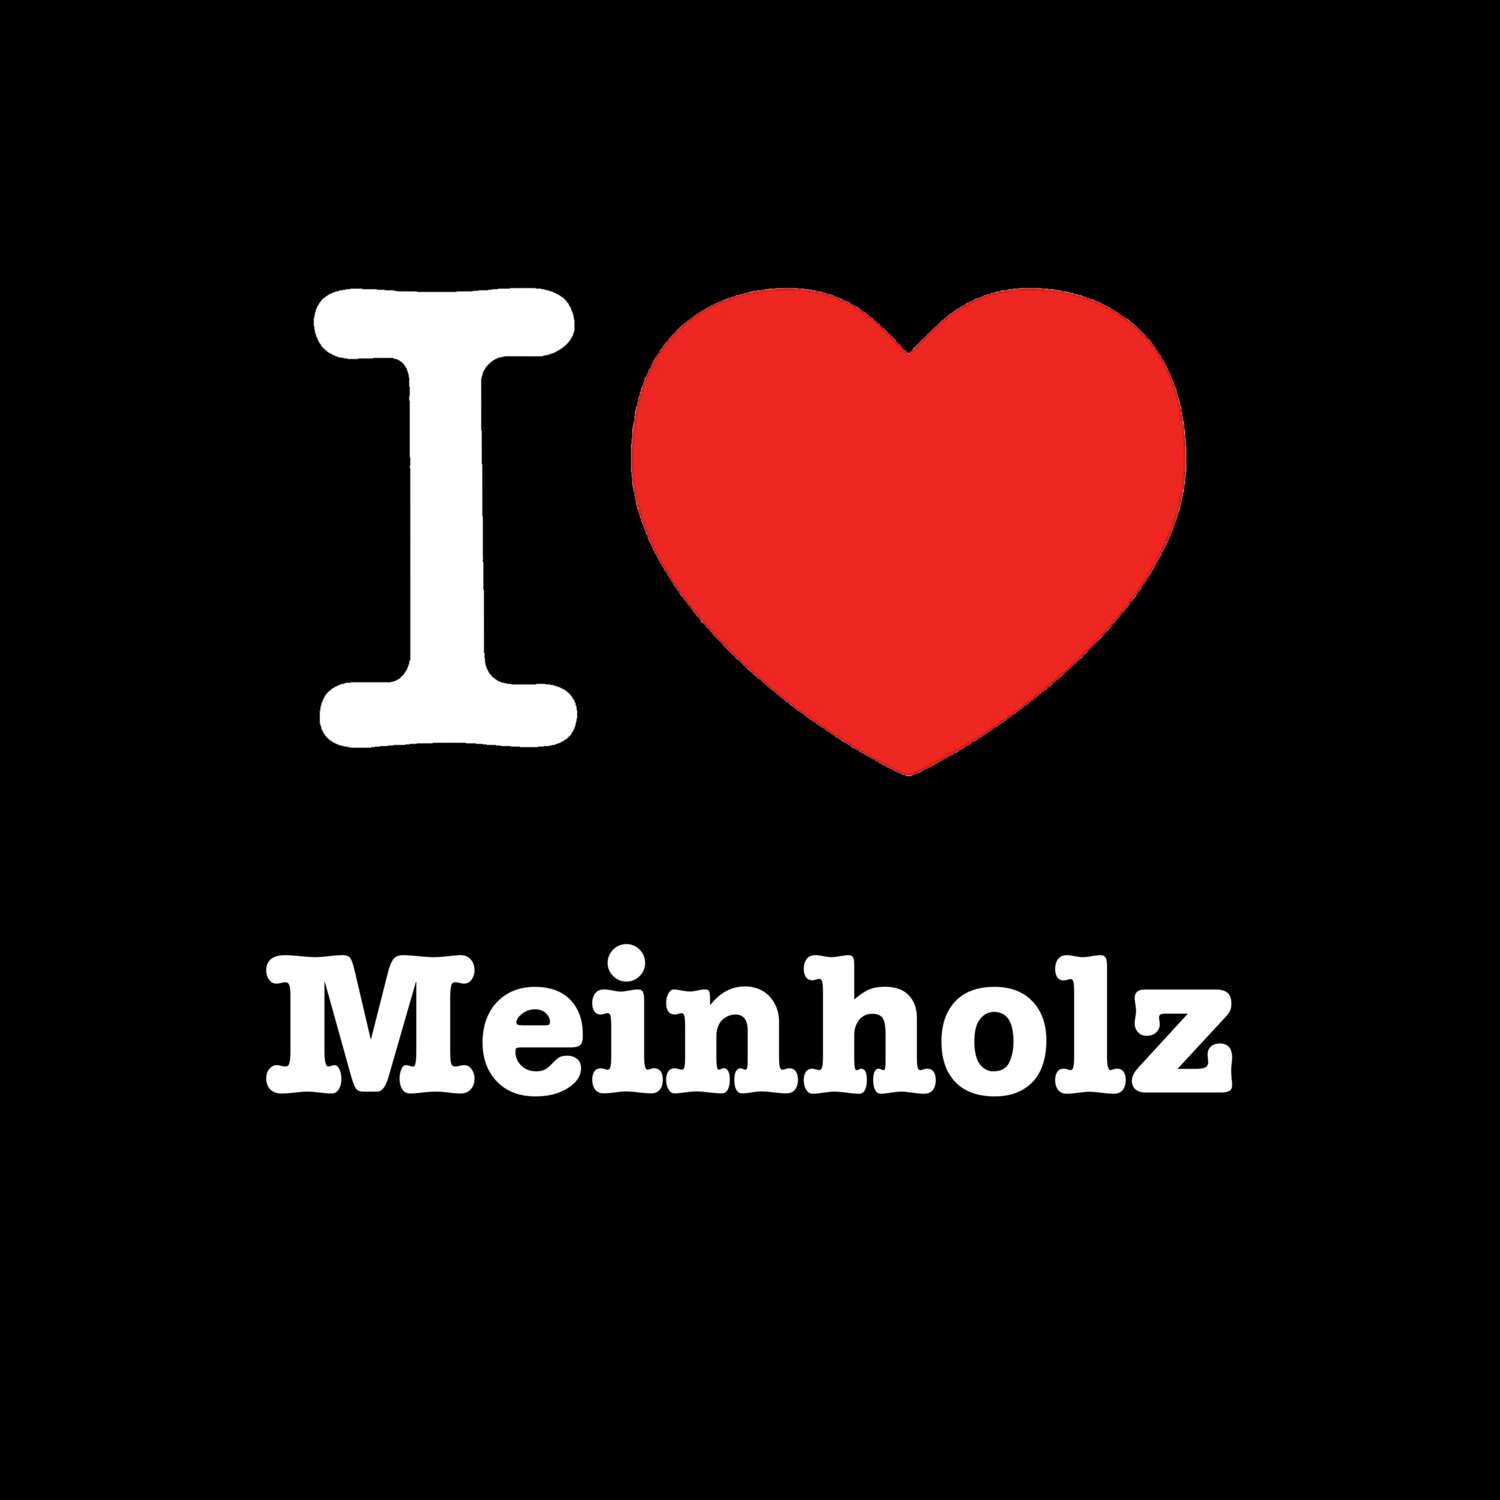 Meinholz T-Shirt »I love«